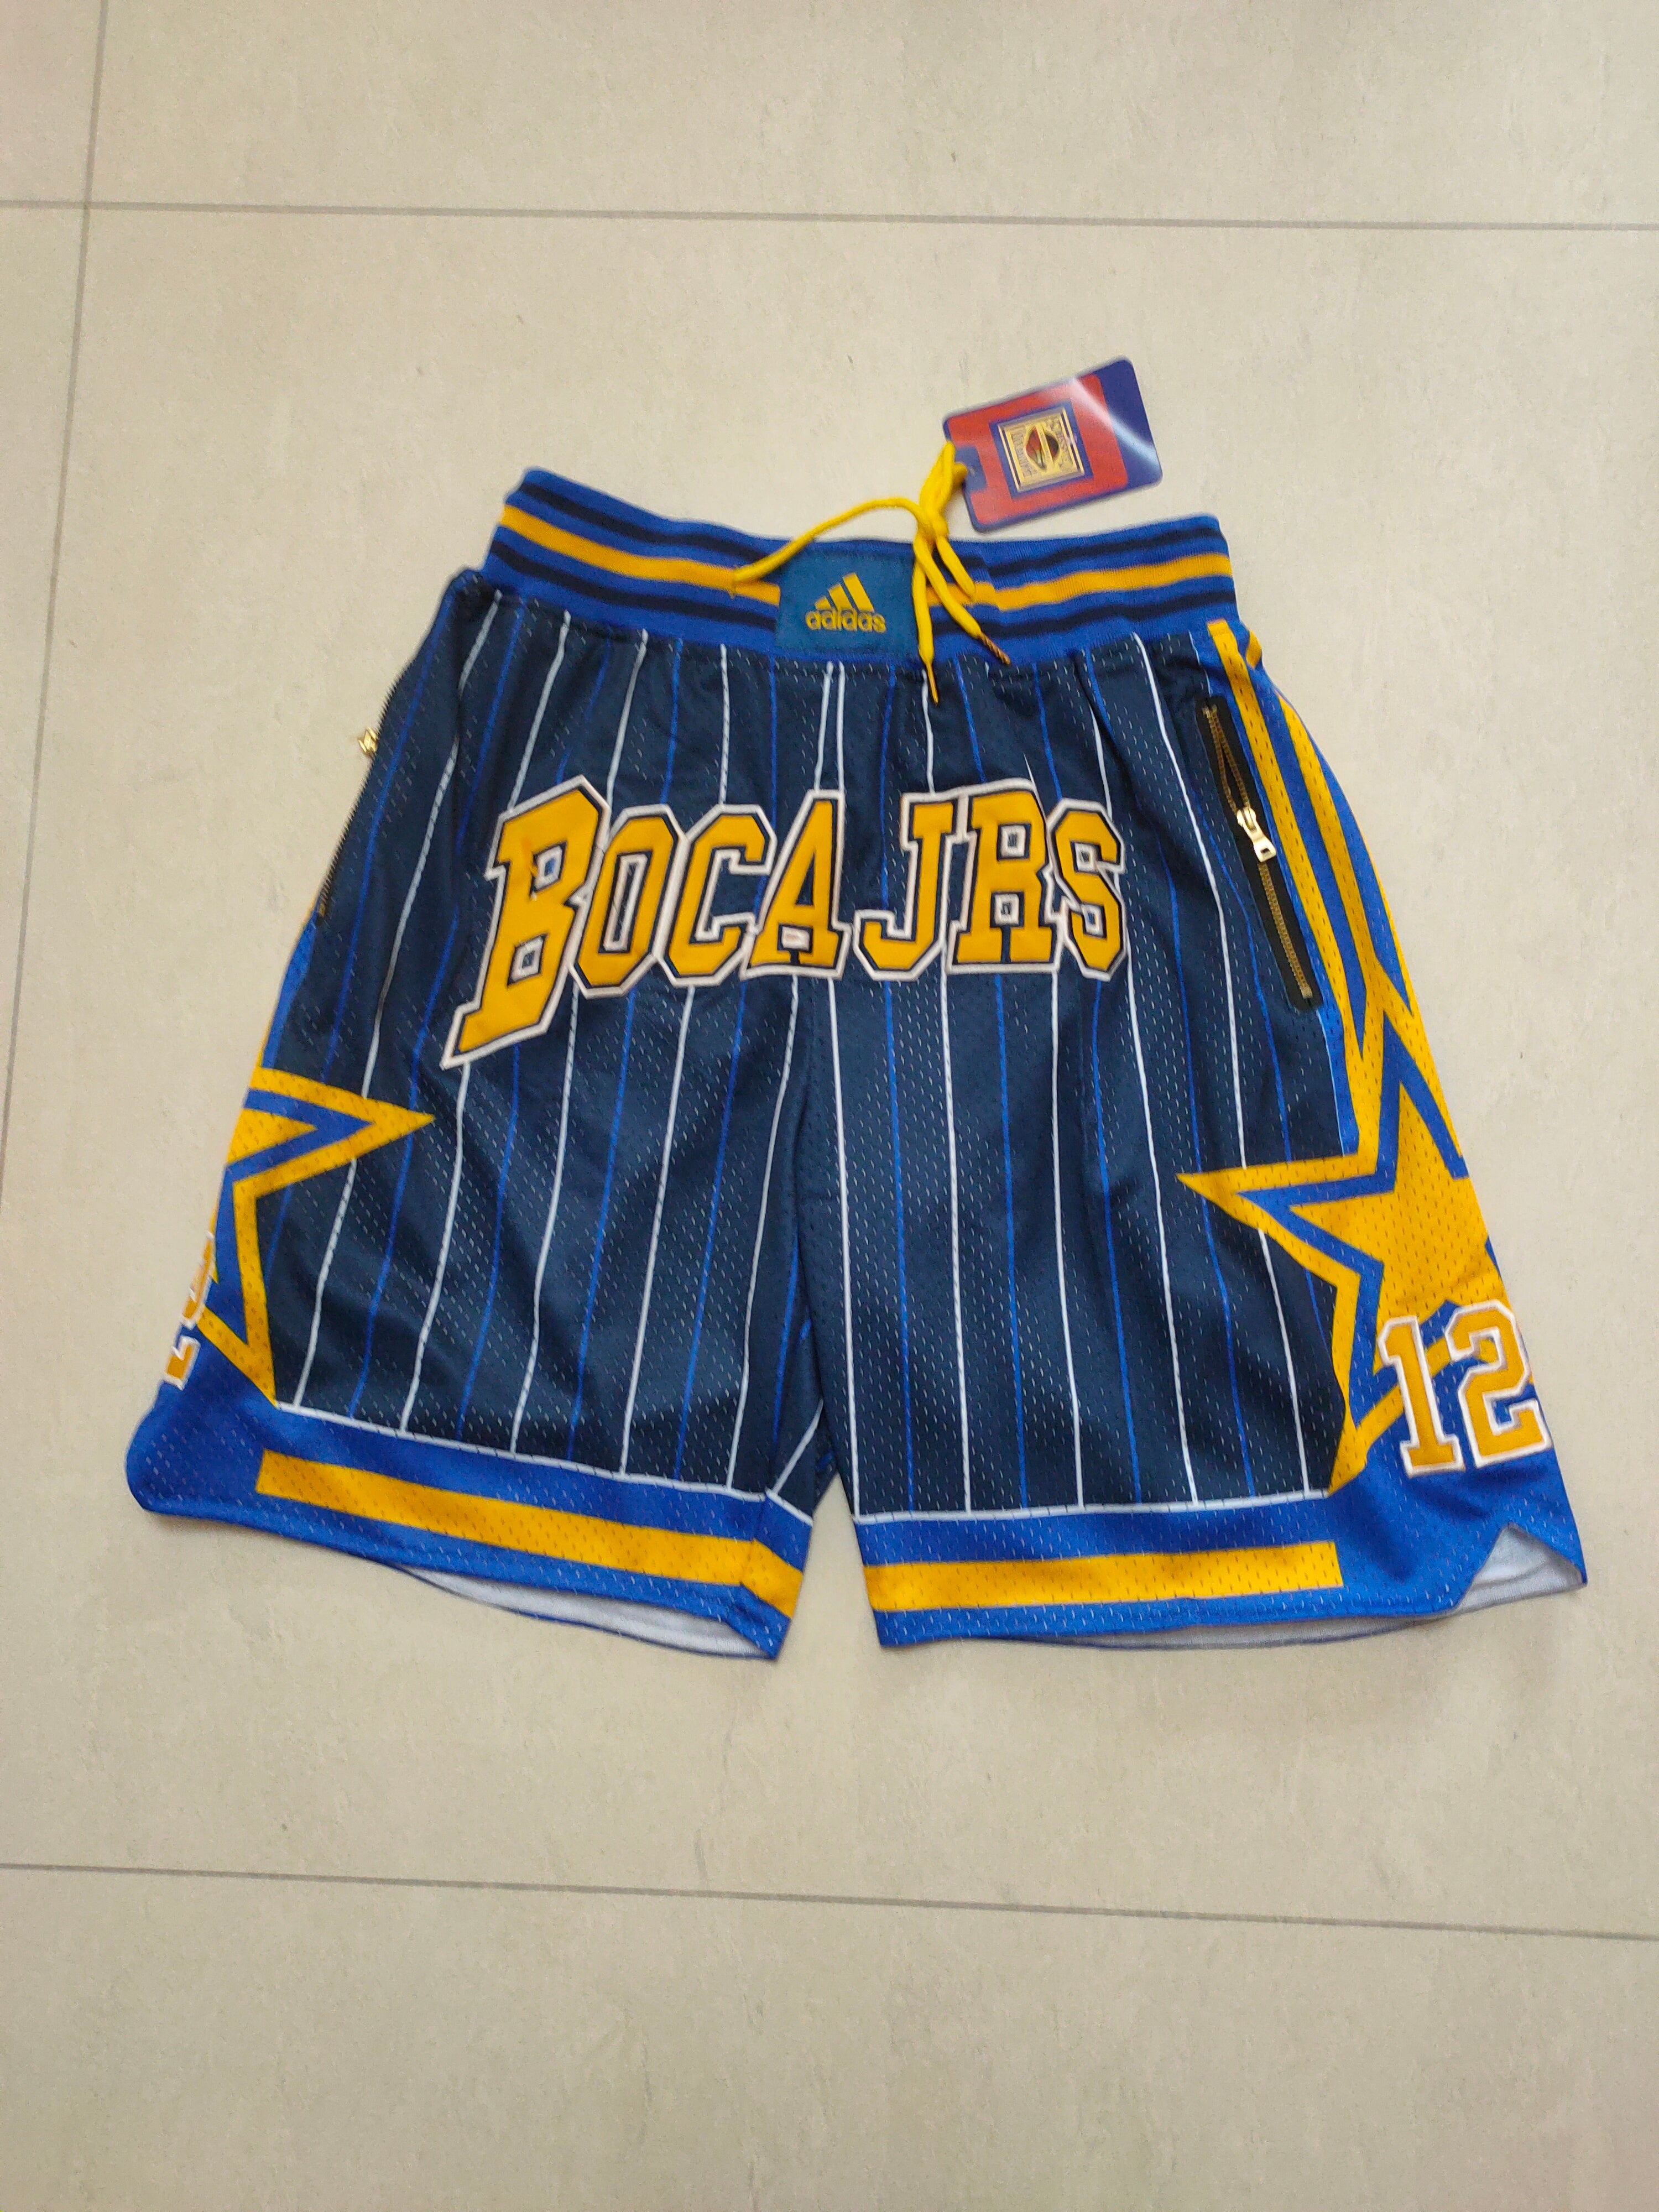 Boca jrs blue/yellow shorts